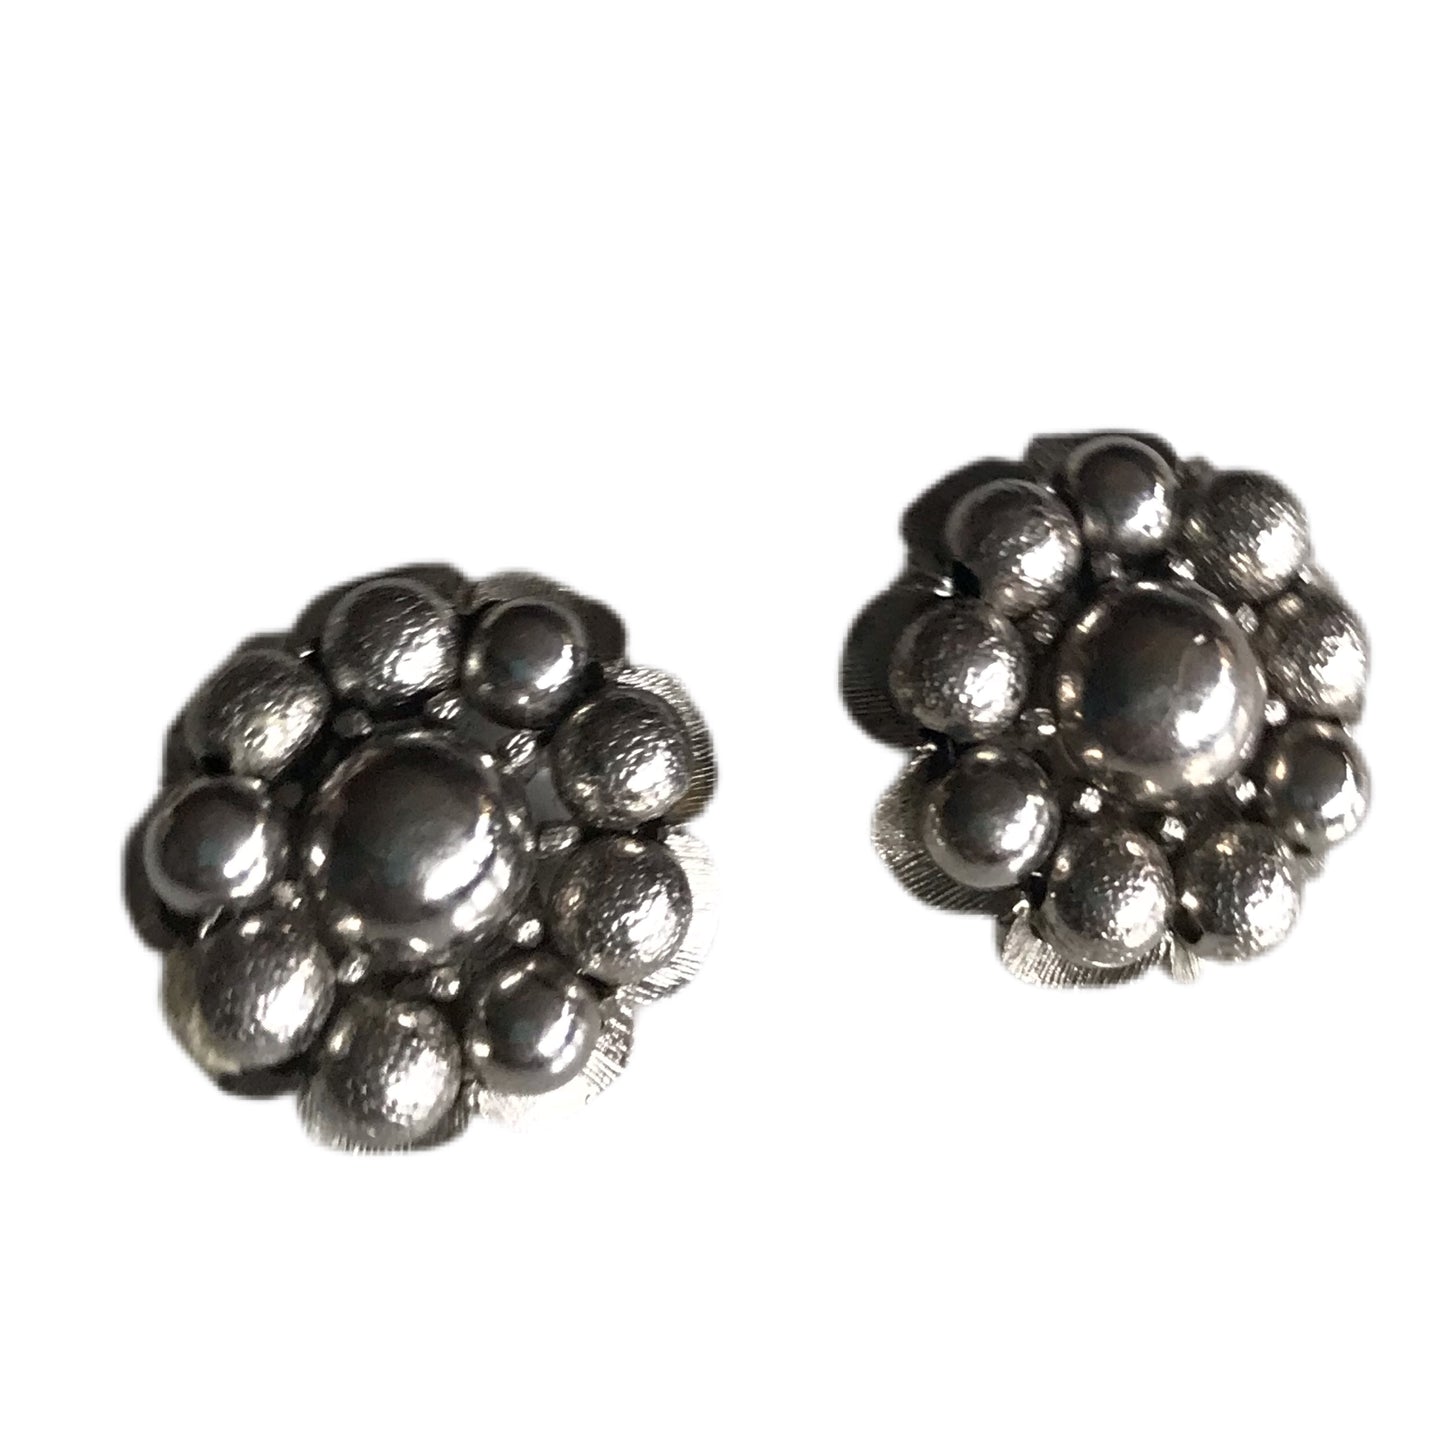 Silver Tone Metal Ball Cluster Clip Earrings circa 1940s